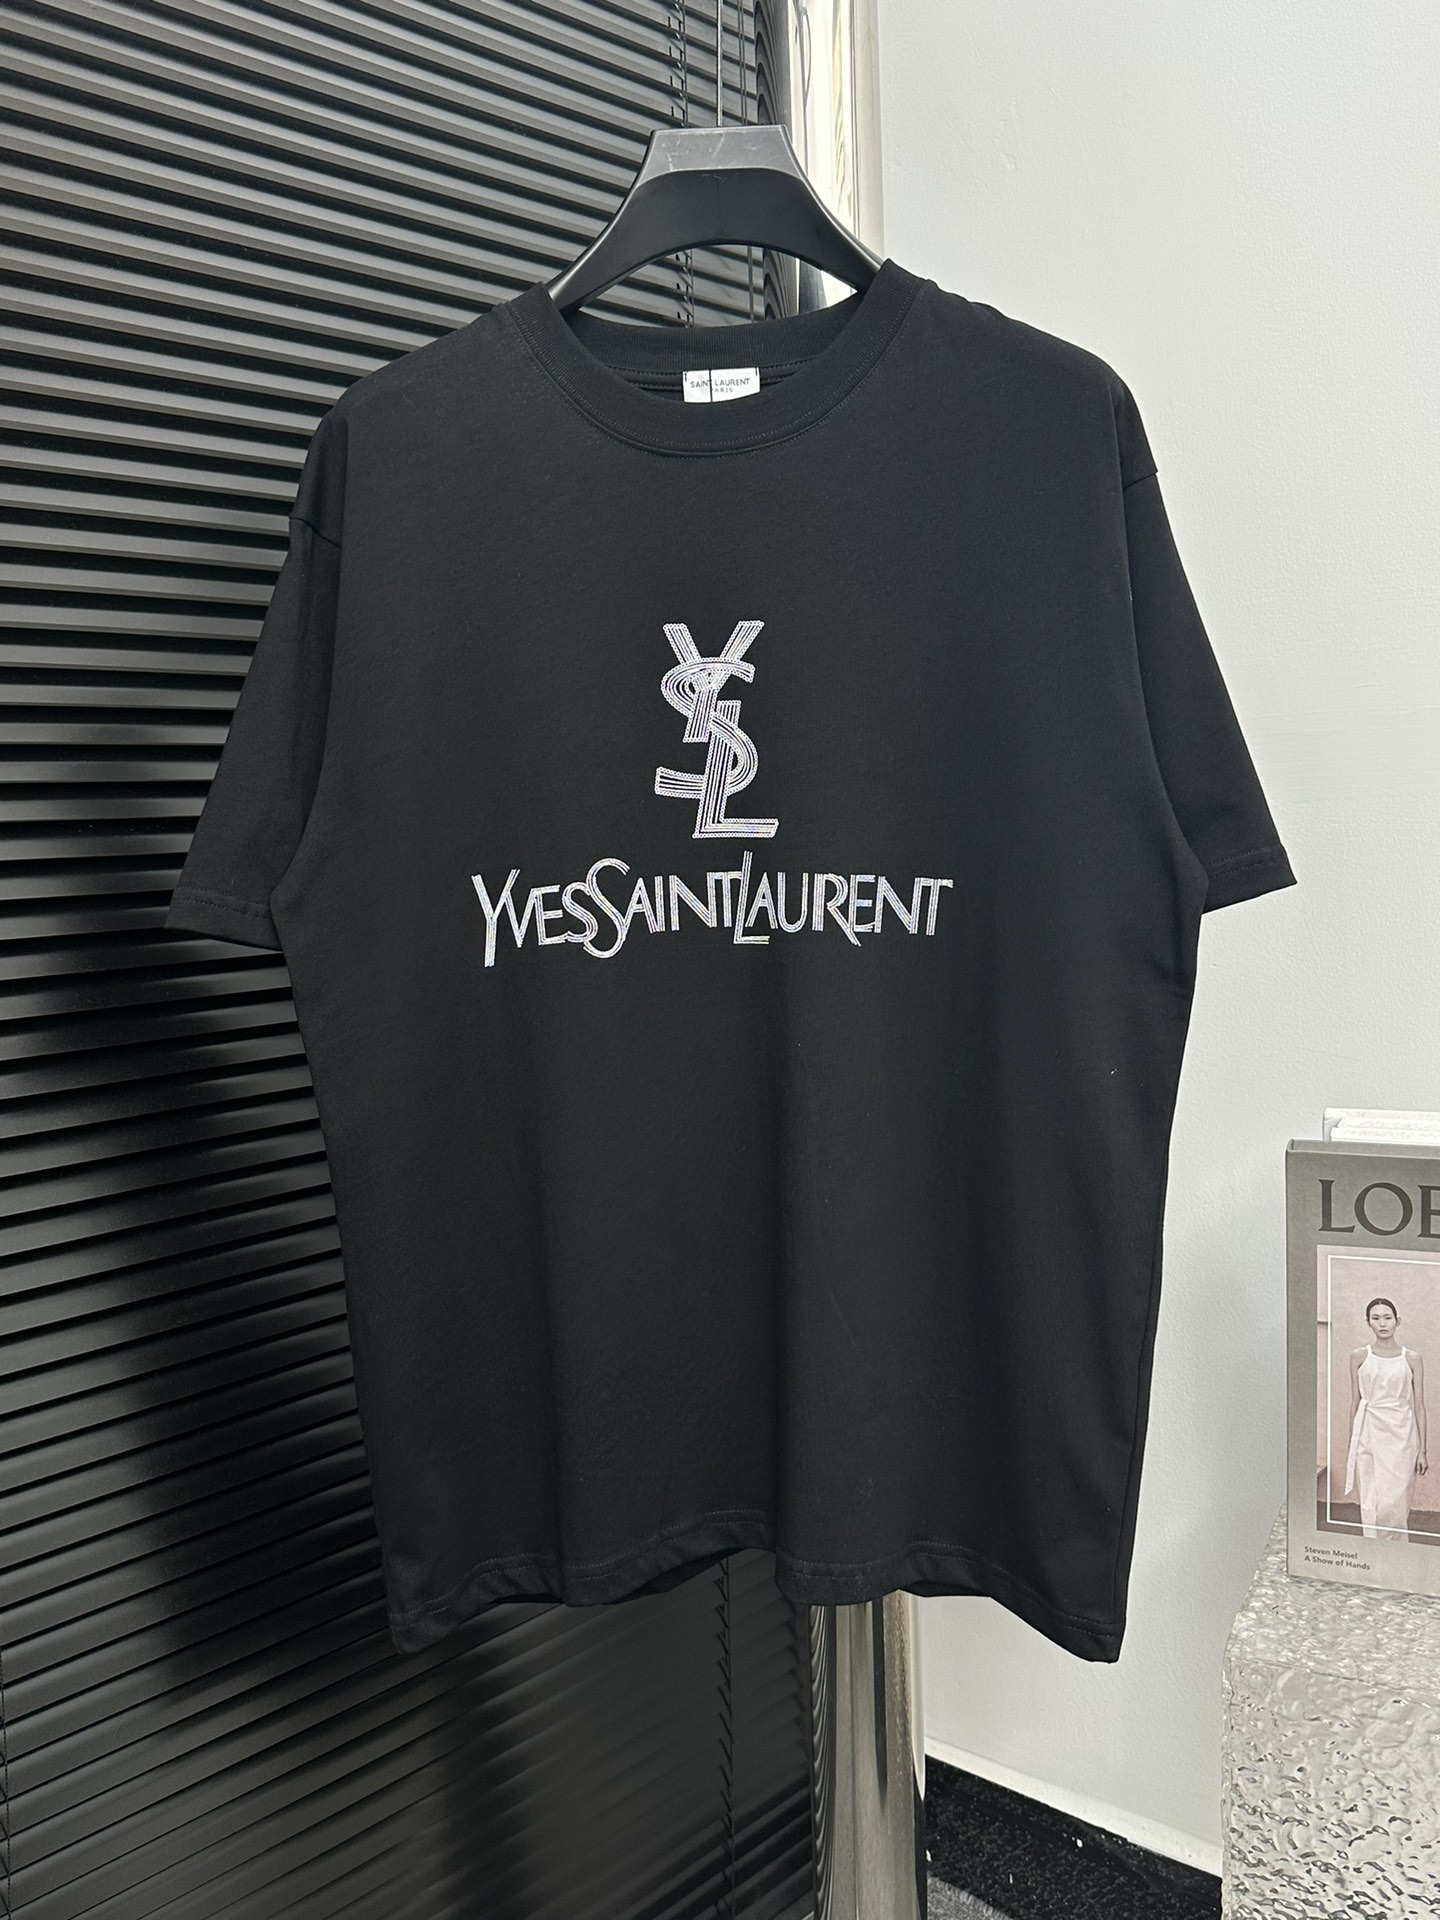 Yves Saint Laurent Clothing T-Shirt Black White Printing Unisex Cotton Short Sleeve